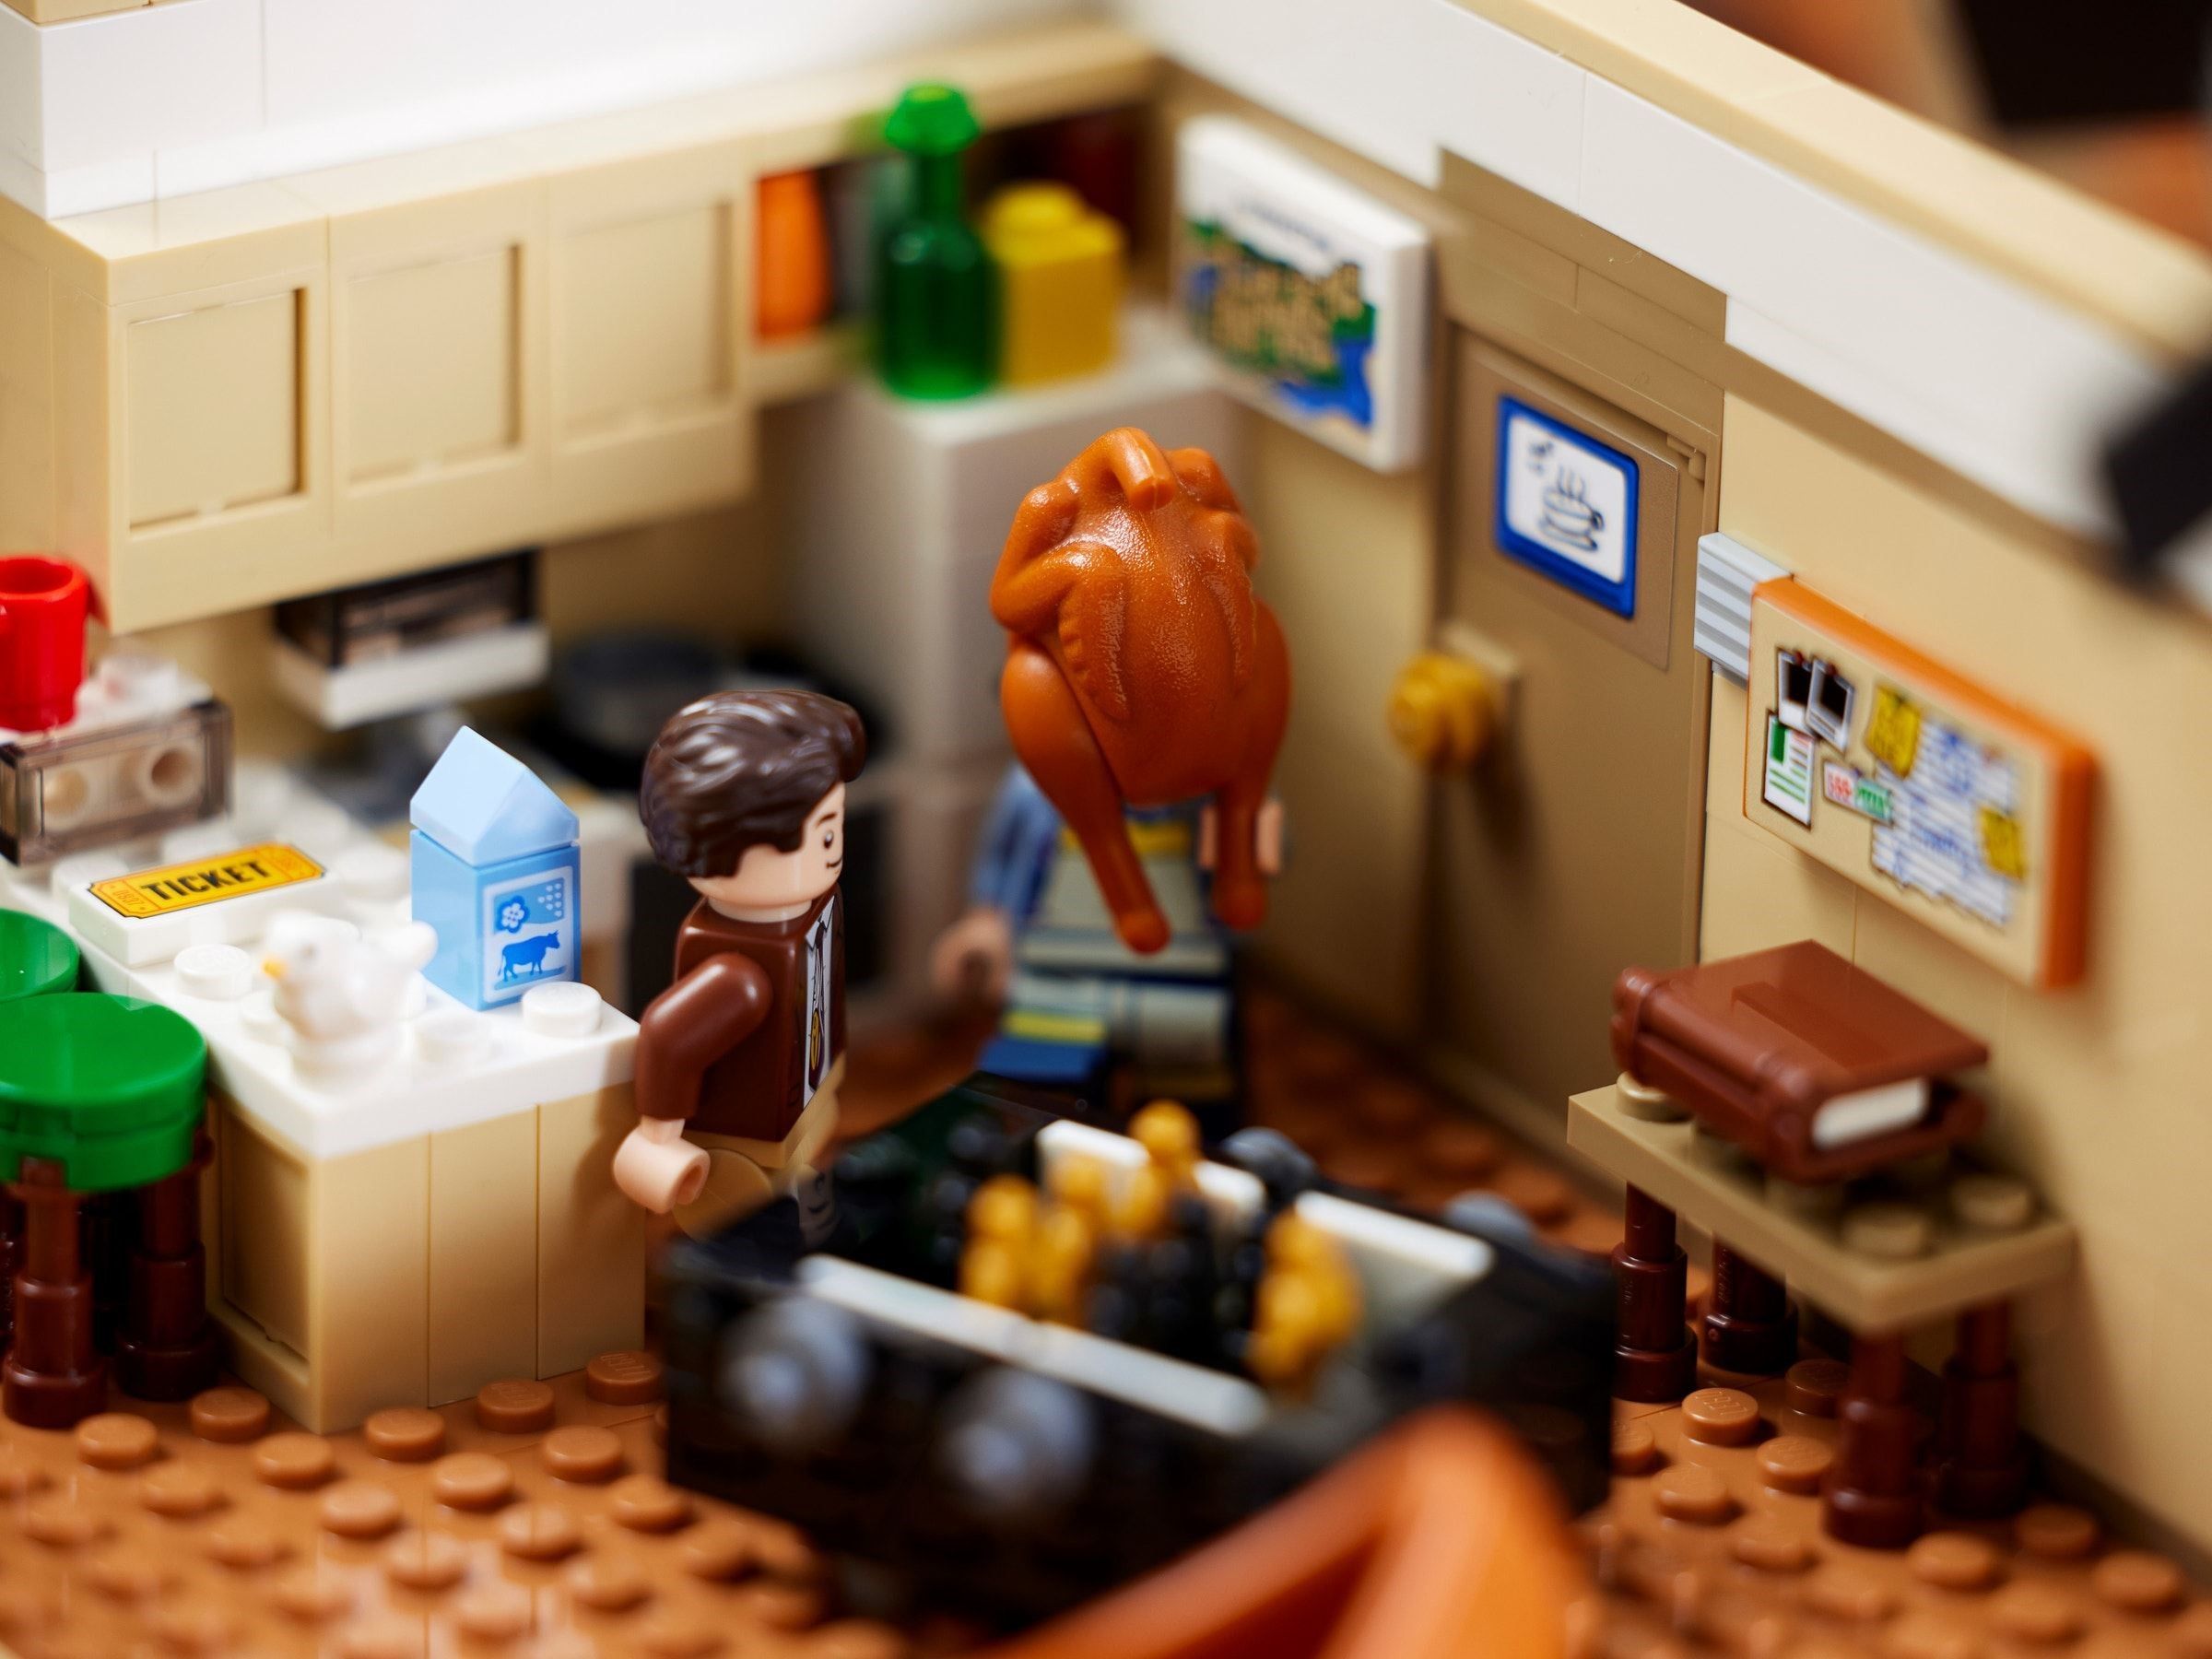 LEGO The Friends Apartments set